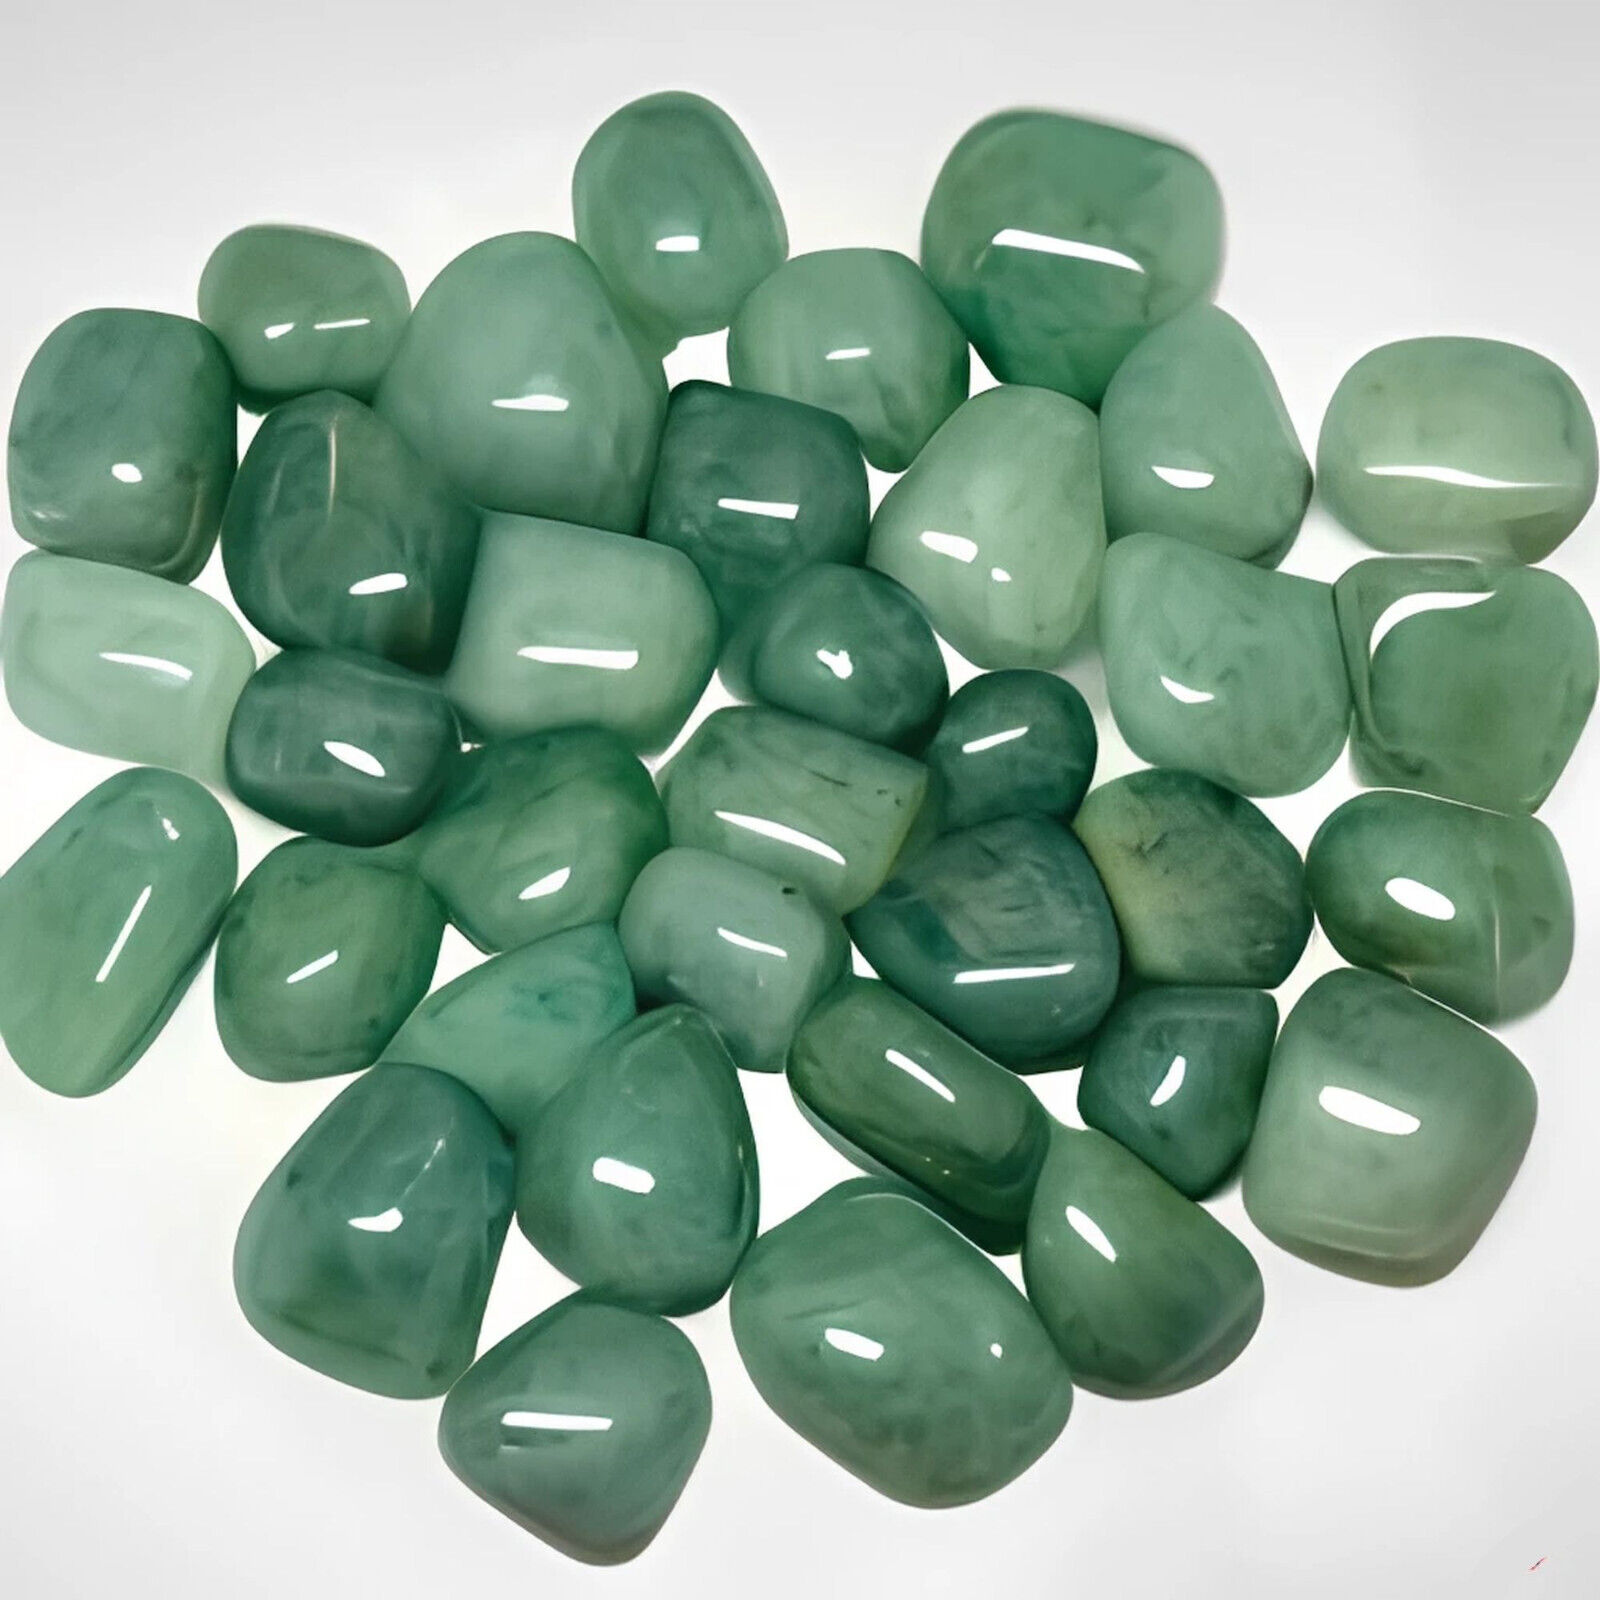 Tumbled GREEN AVENTURINE * Small to Large Sizes * Translucent Brazil Gemstone